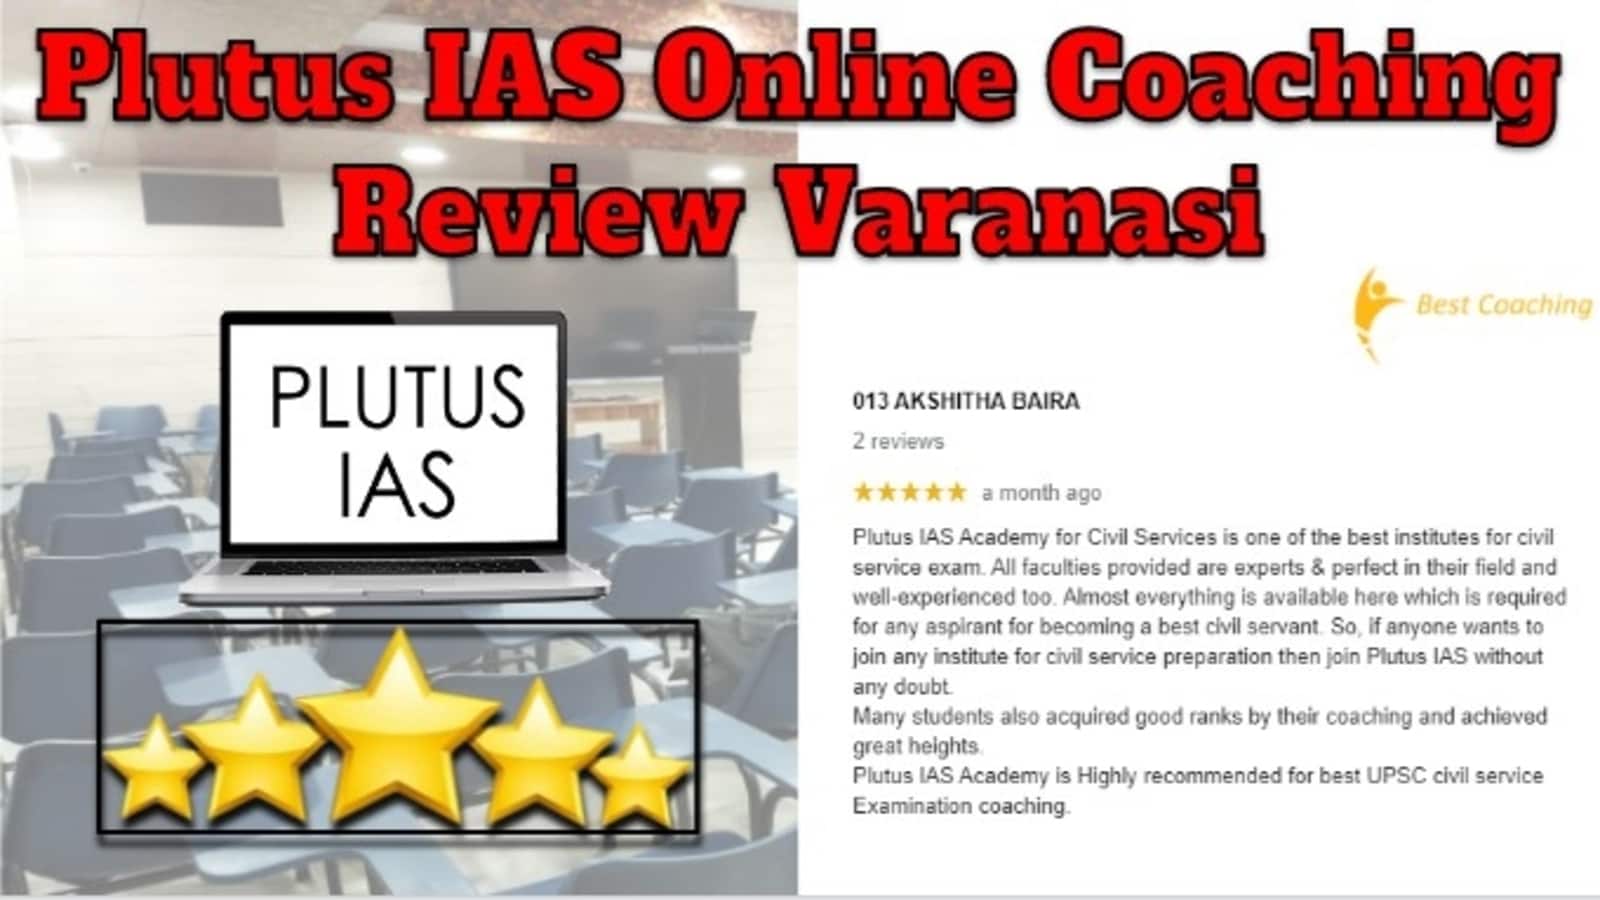 Plutus IAS Online Coaching Review Varanasi